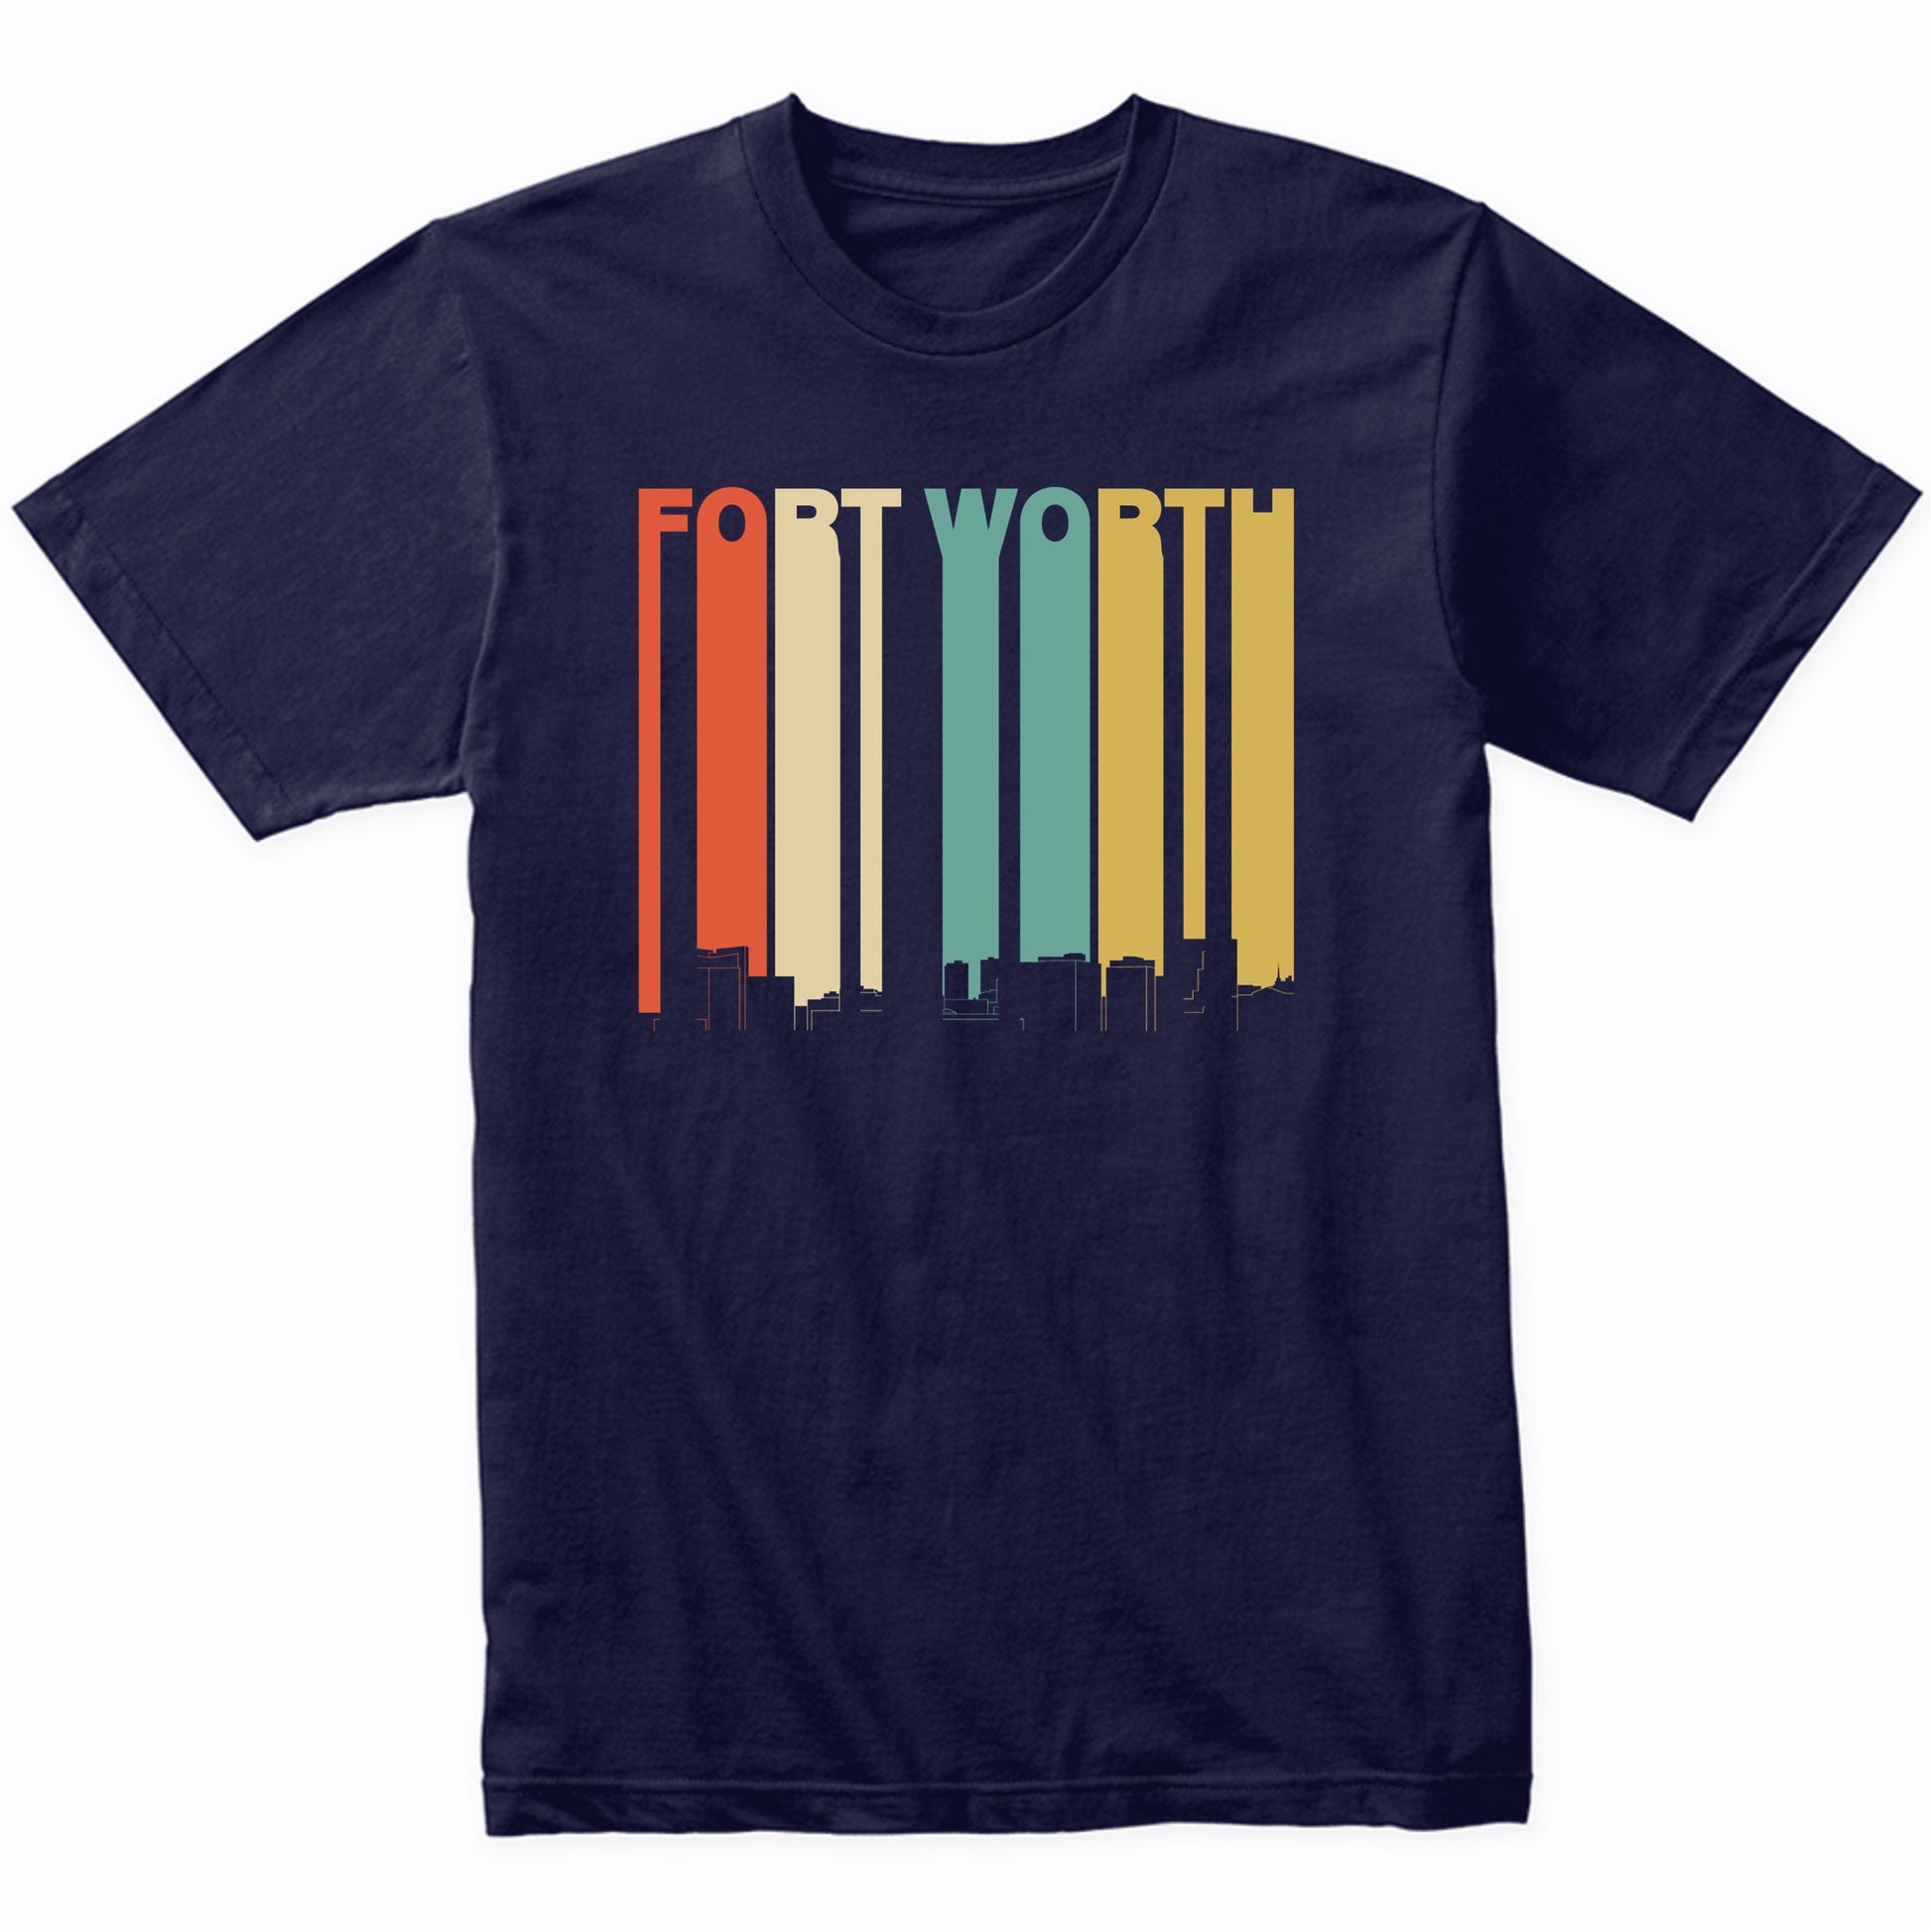 Vintage 1970's Style Fort Worth Texas Skyline T-Shirt